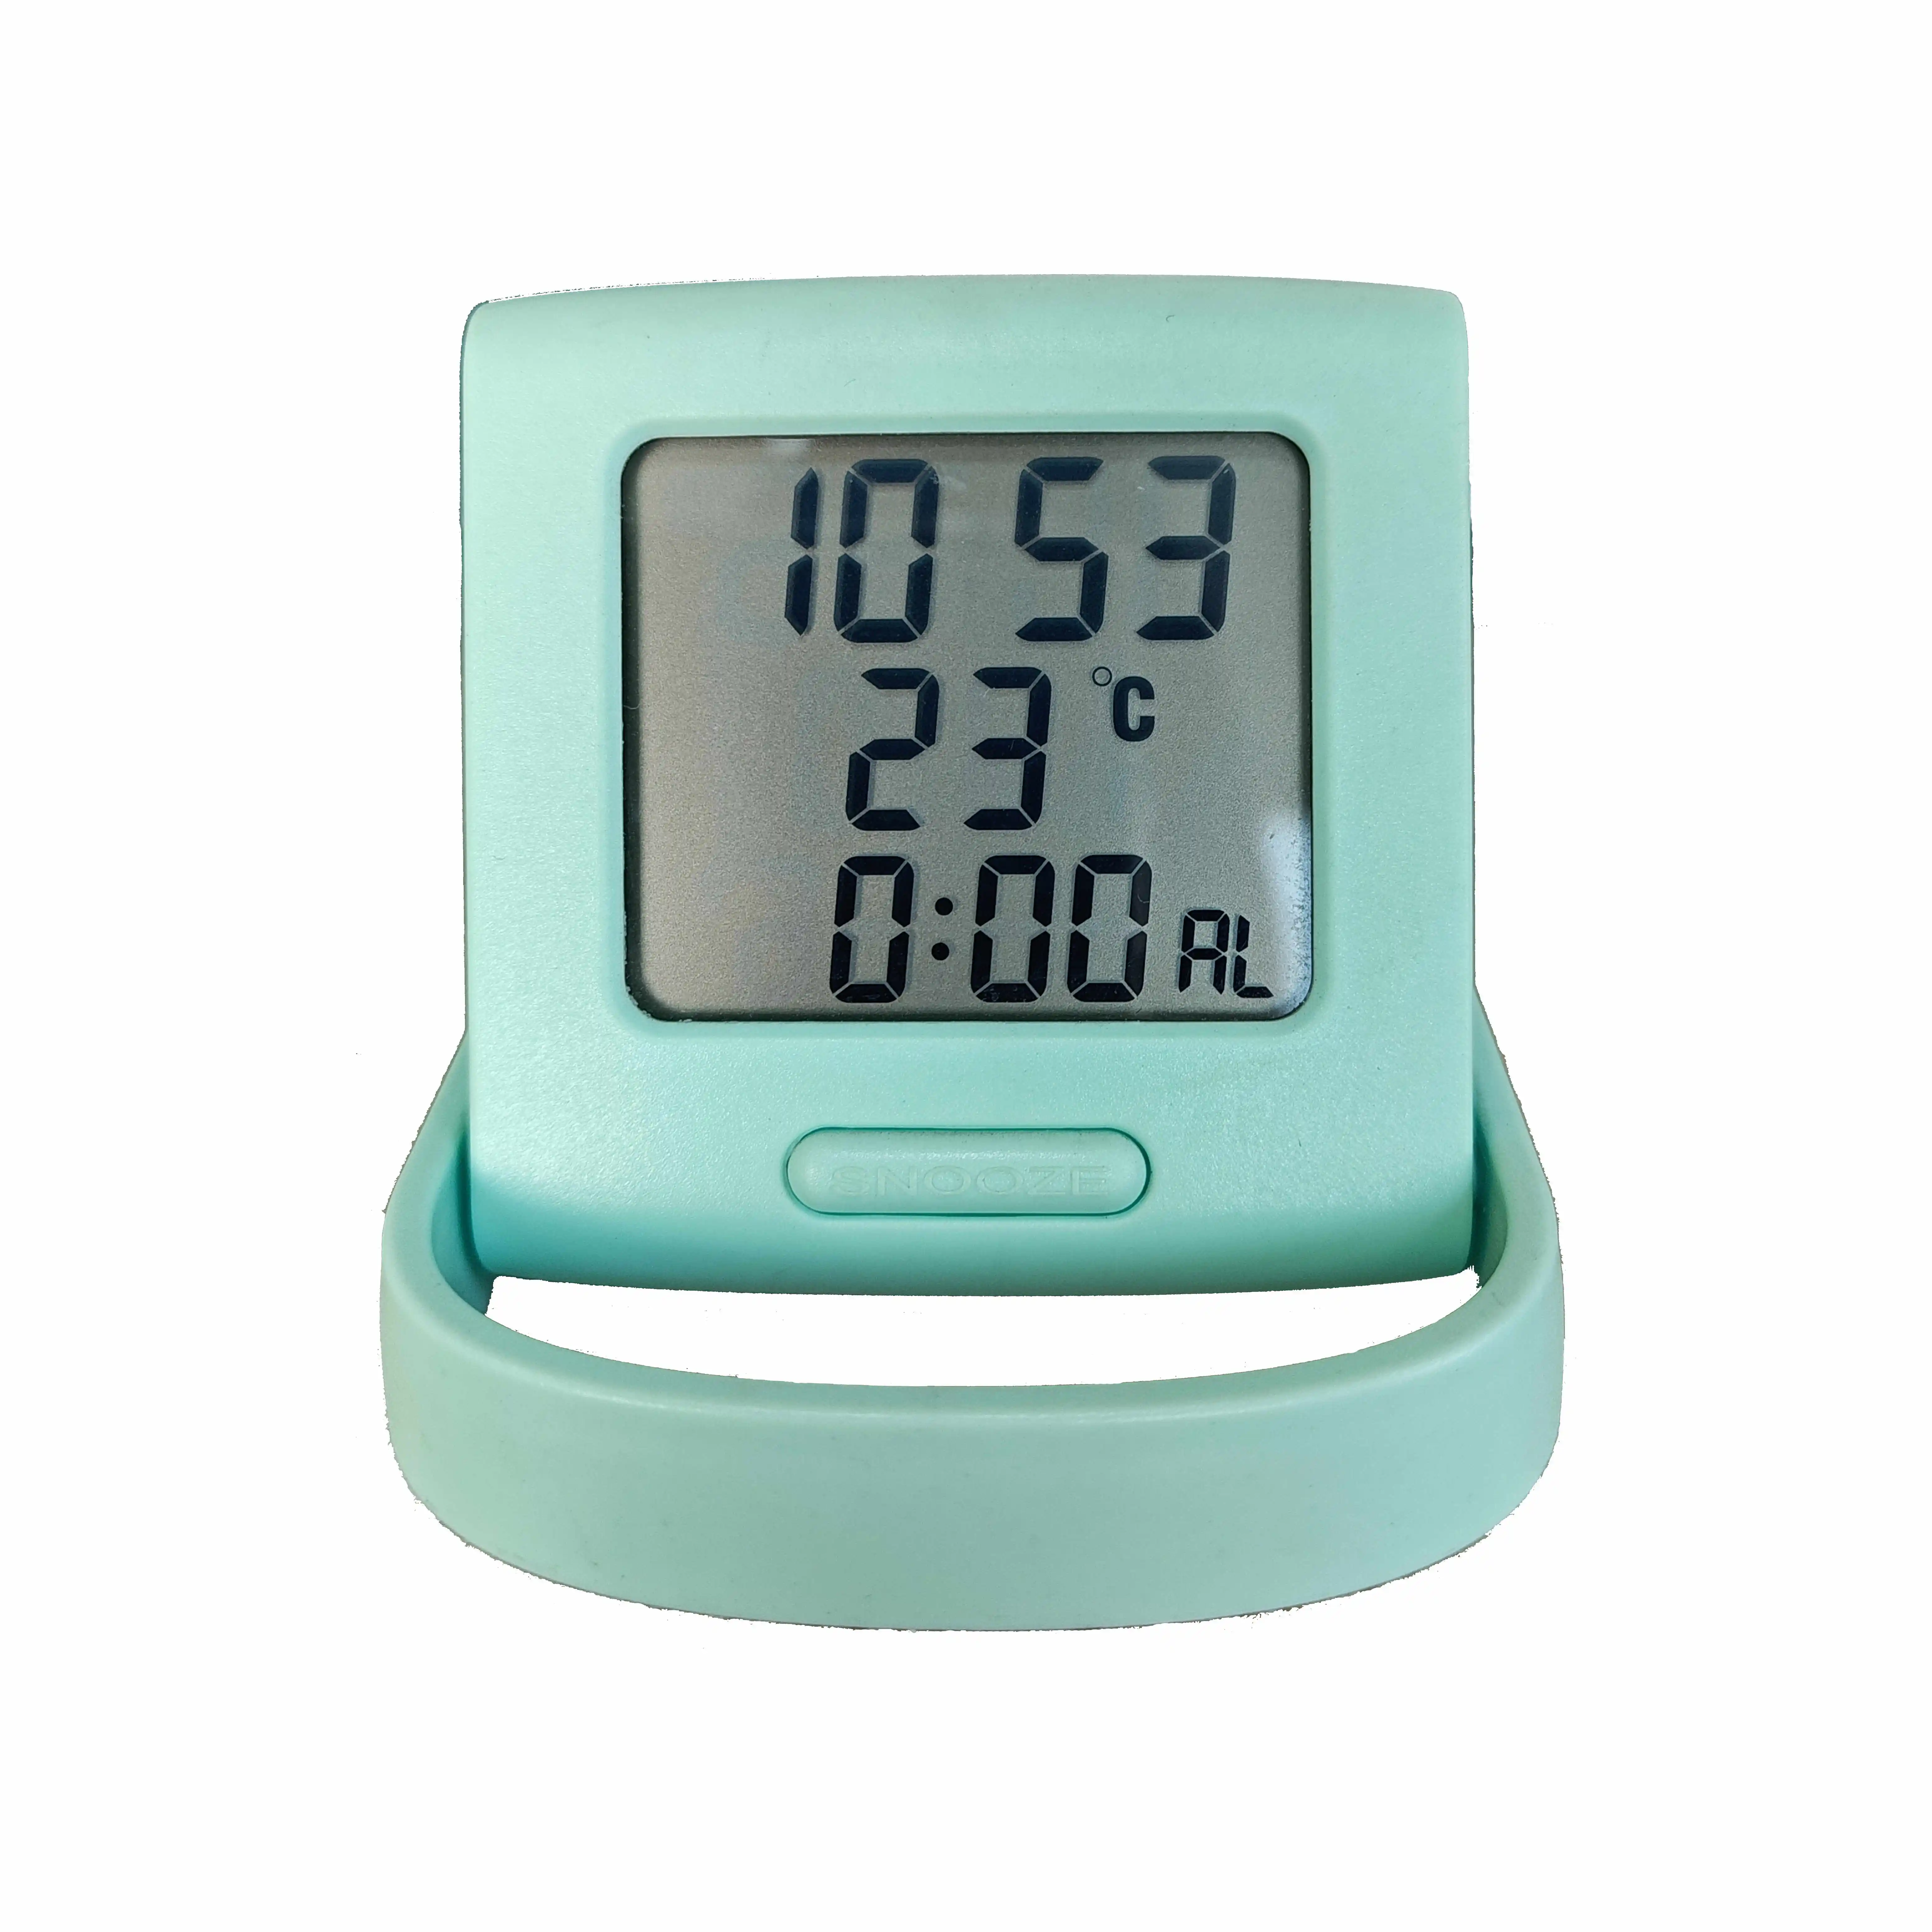 Produsen Tiongkok grosir baru modis jam Mini LCD Digital jam Alarm anak-anak jam AC-01